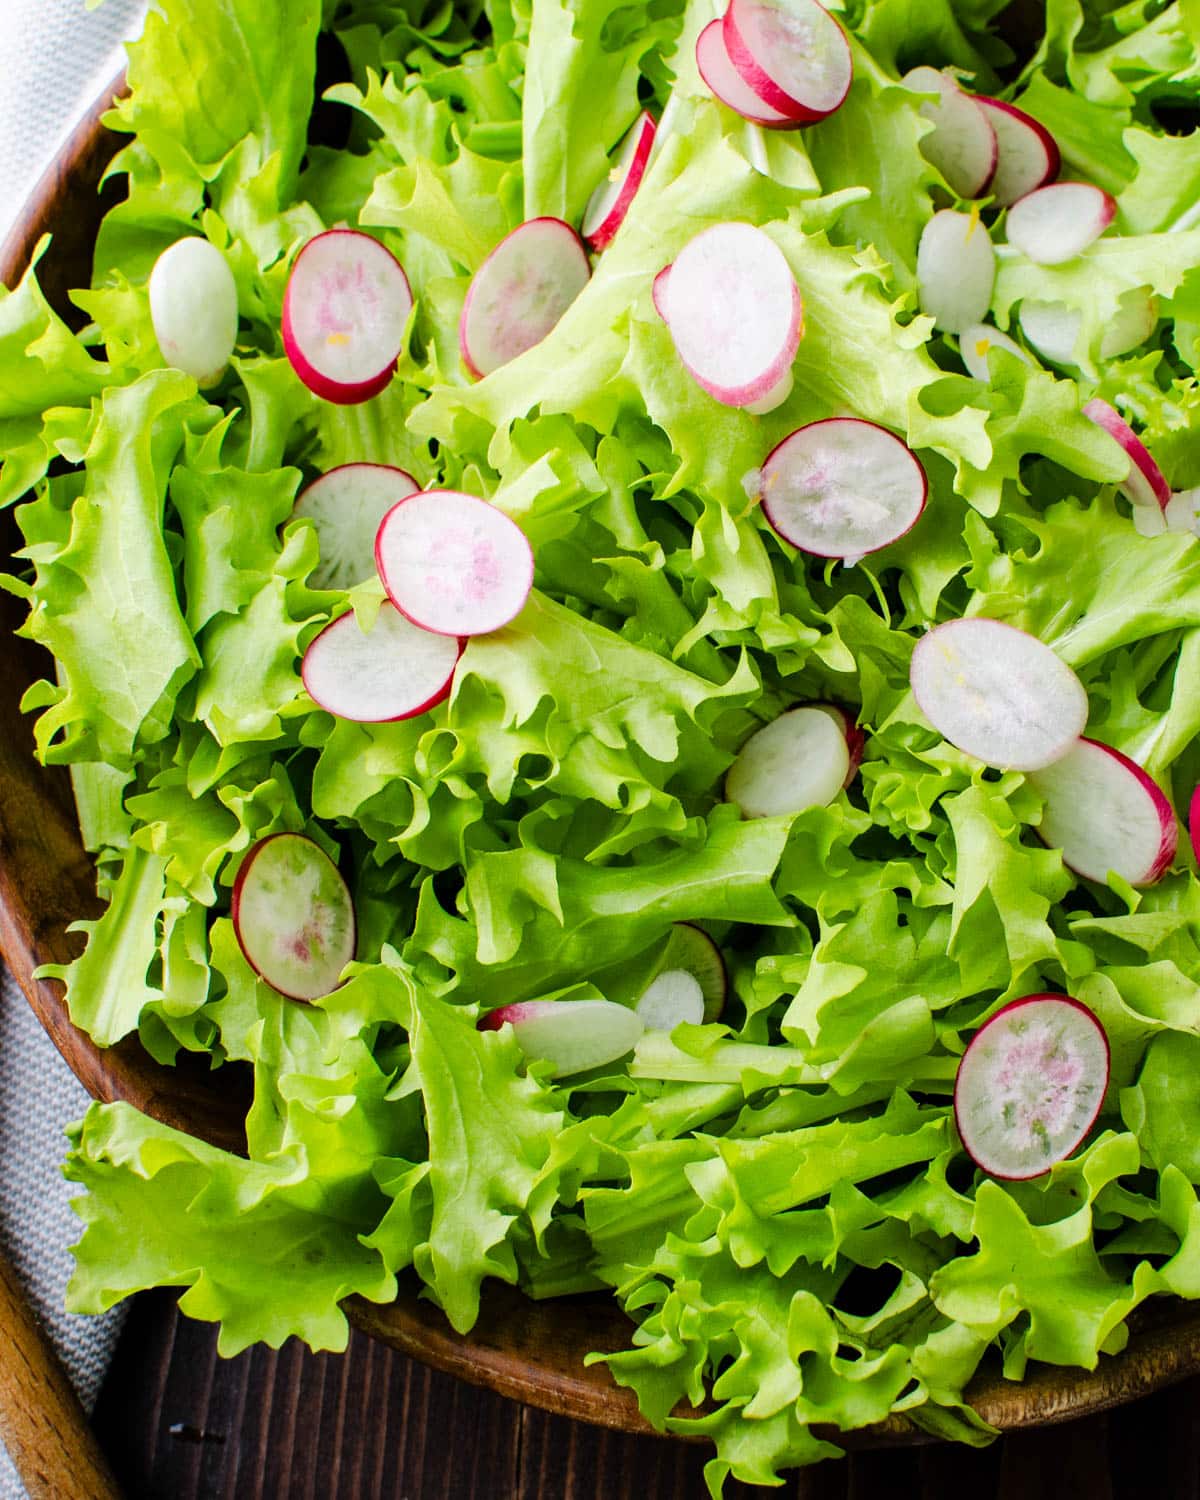 frisee lettuce and radishes.